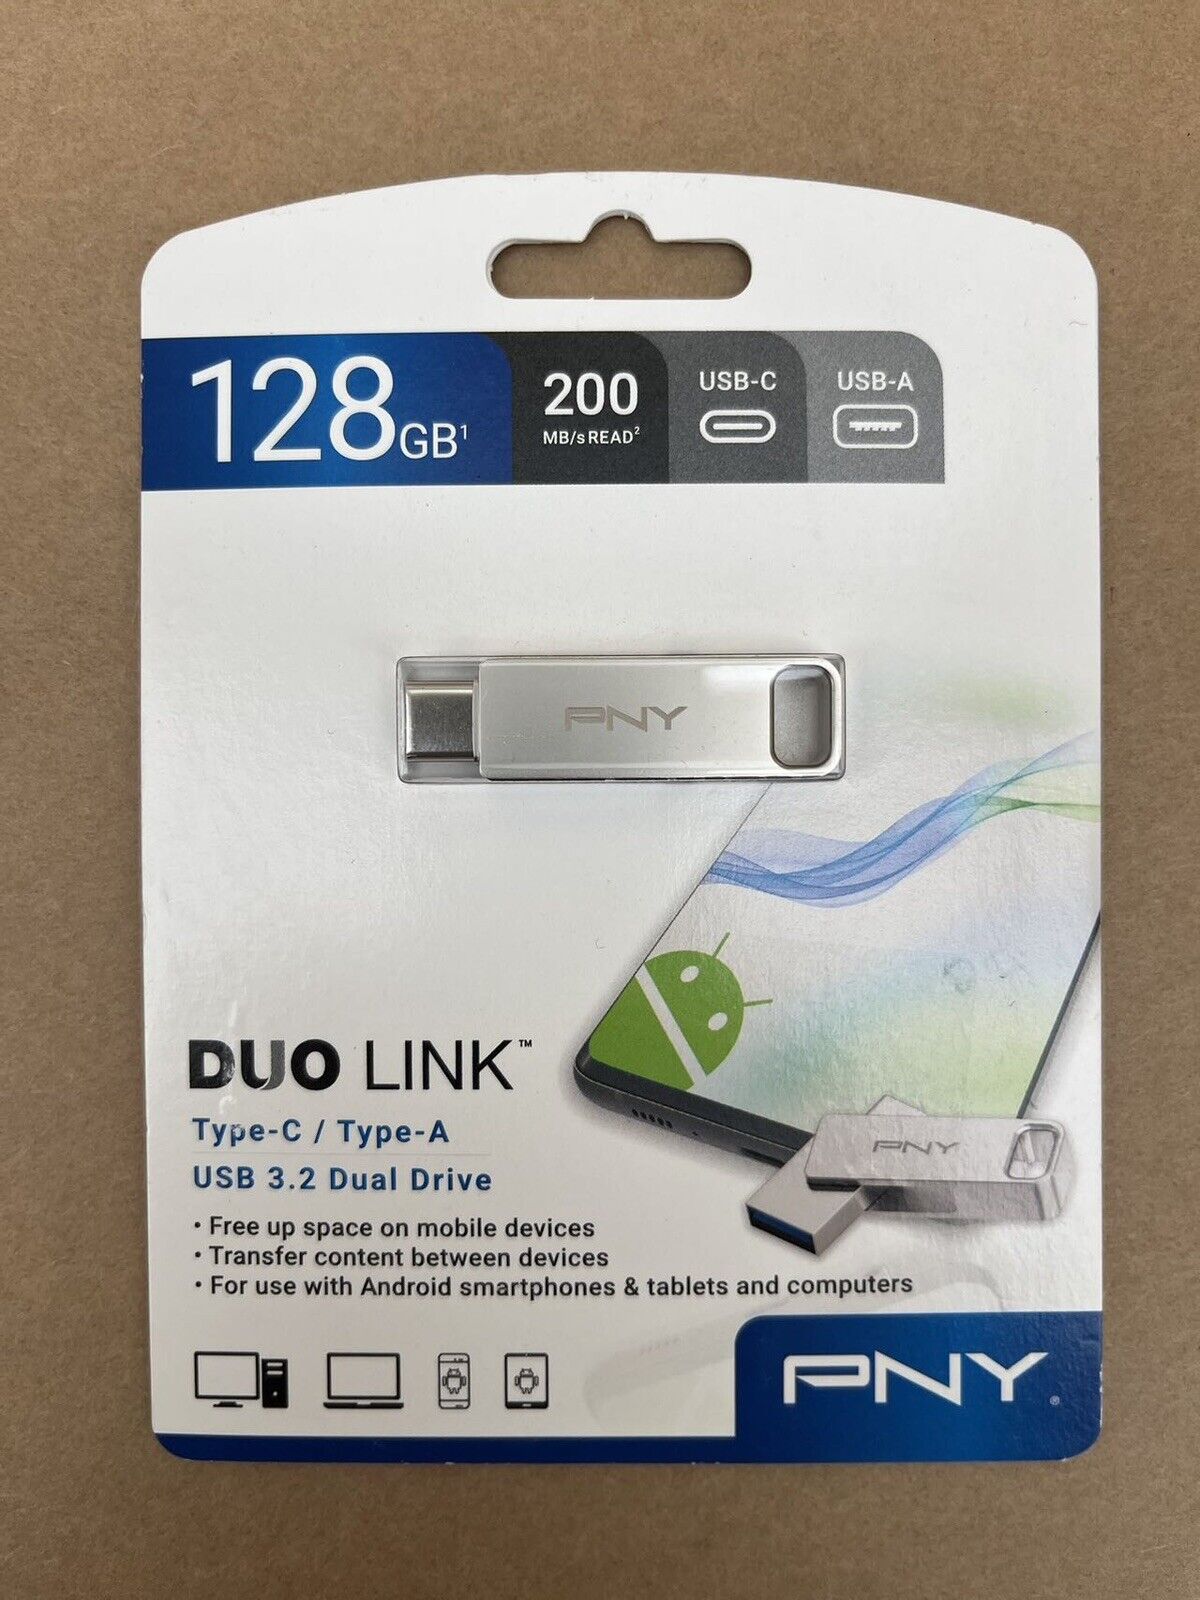 PNY 128GB Duo Link iOS USB 3.2 Dual Flash Drive, Silver